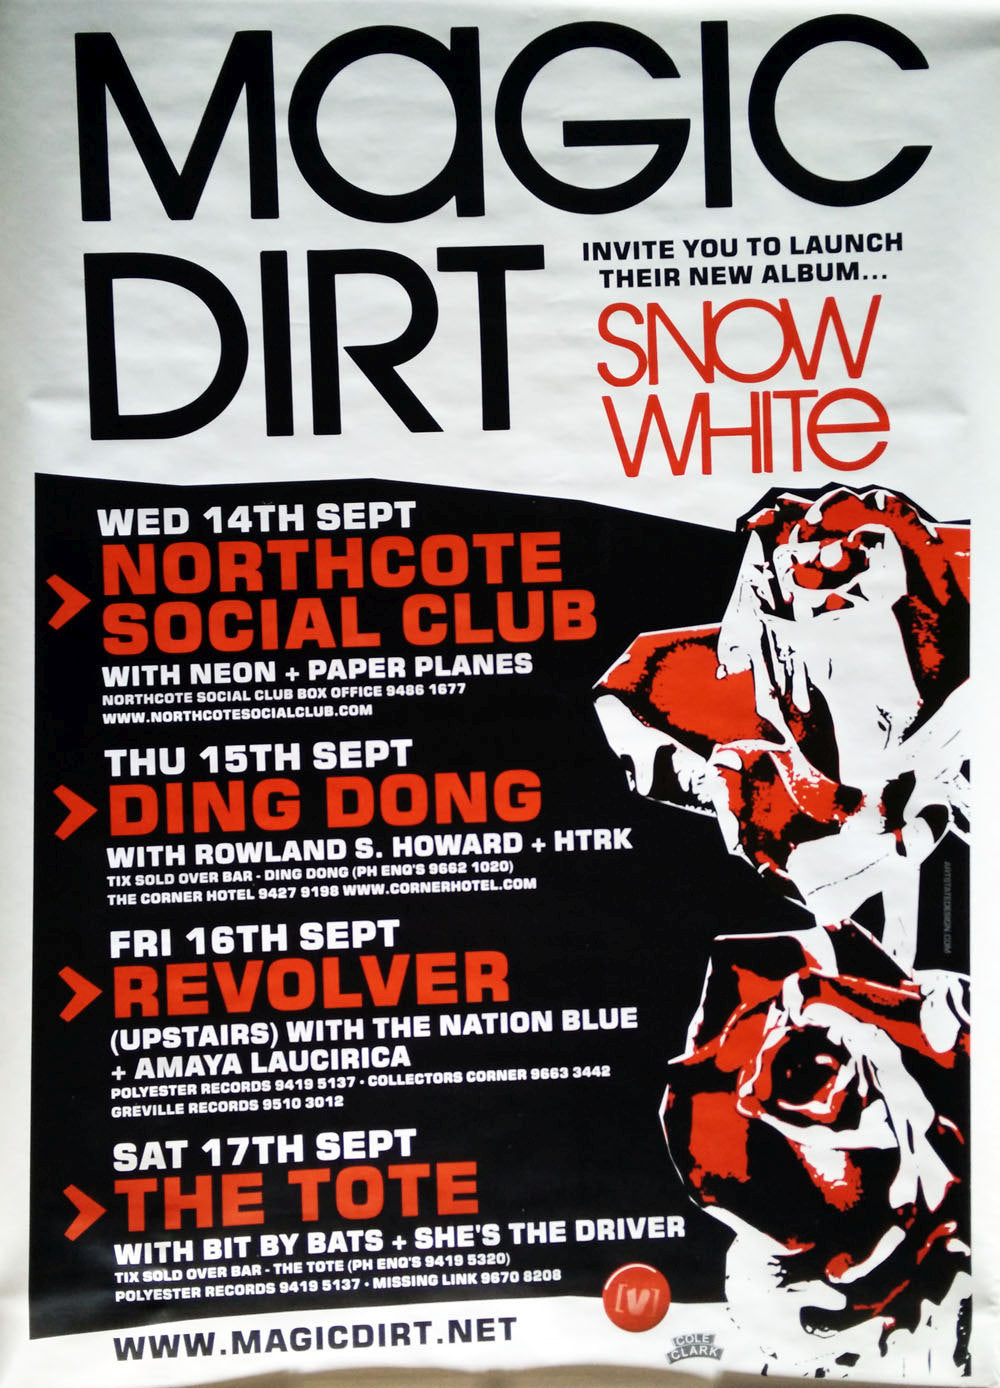 MAGIC DIRT - Snow White 2005 Album Tour Poster - 1